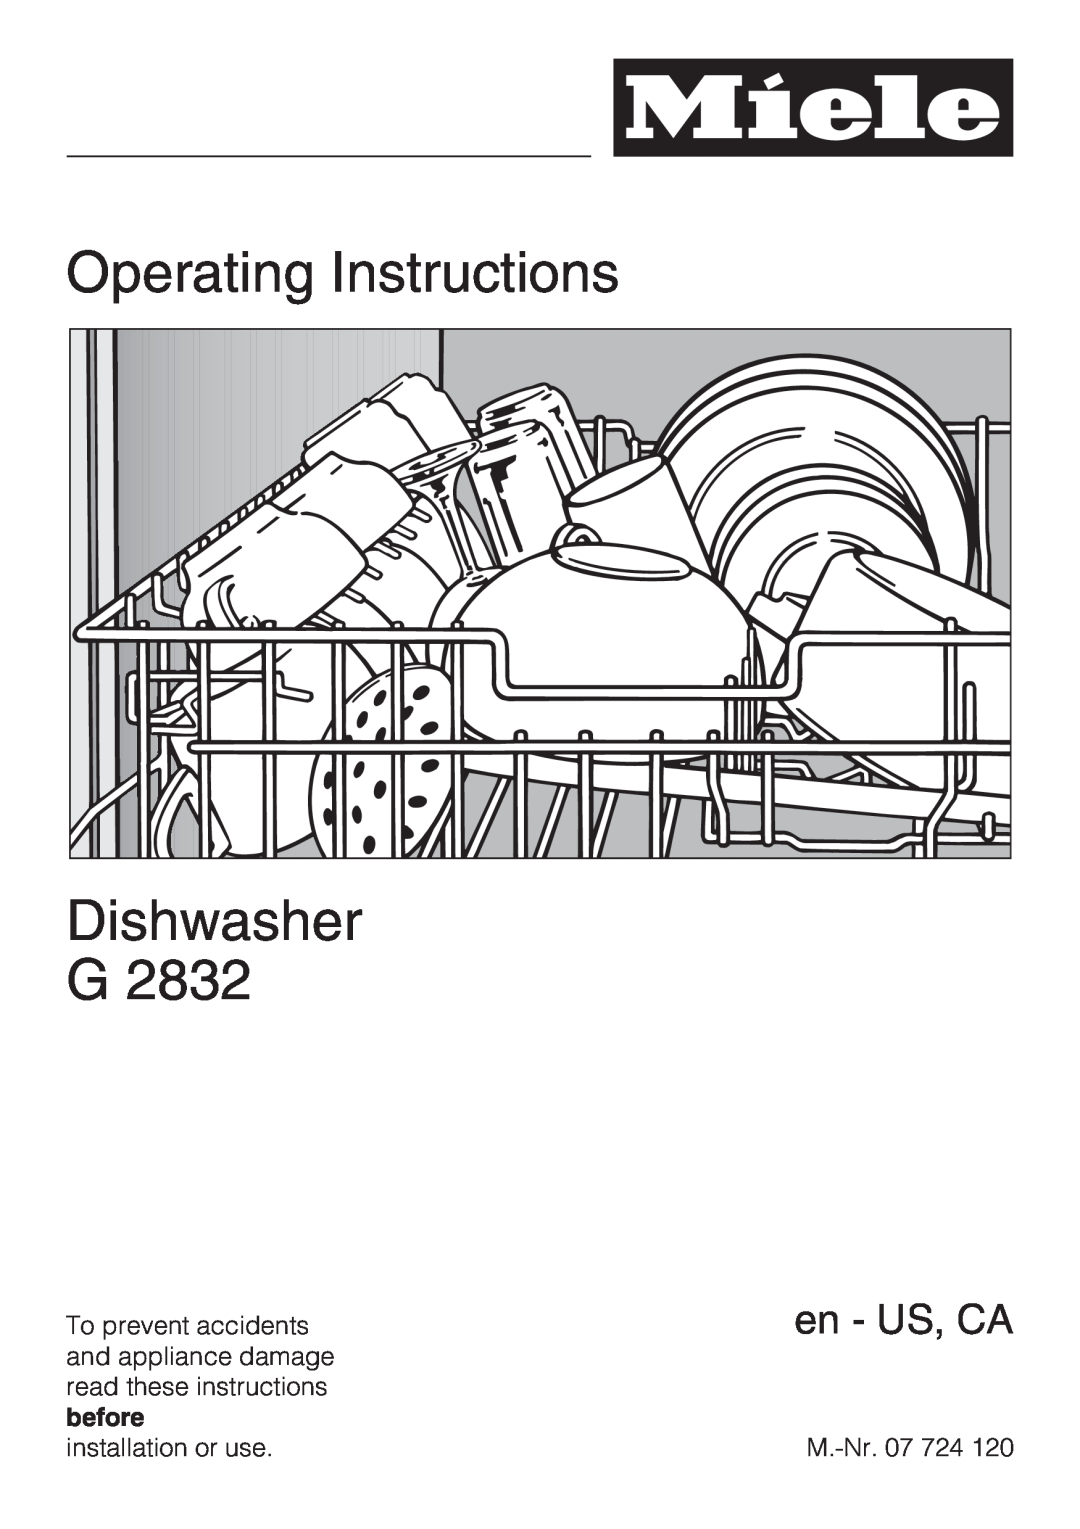 Miele G 2832 manual Operating Instructions, Dishwasher, en - US, CA 